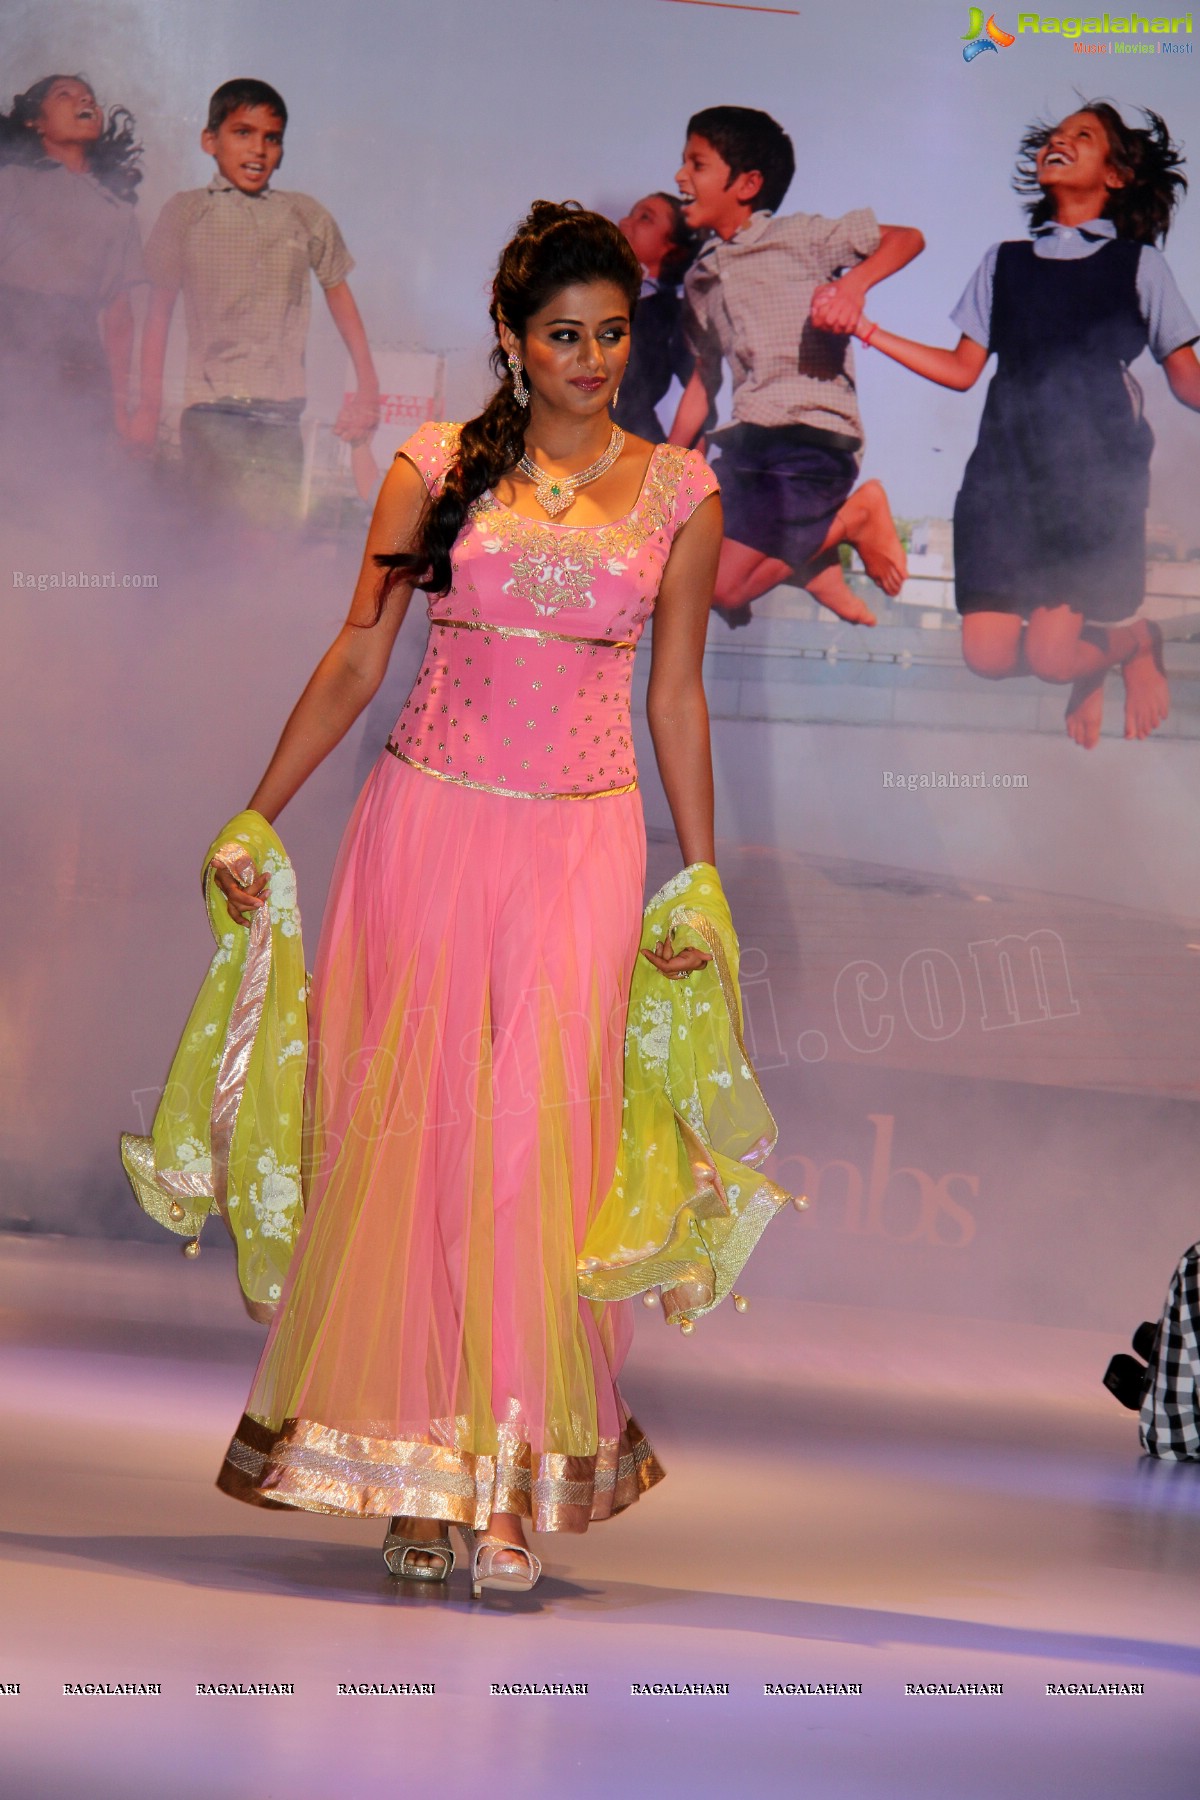 Priyamani walks the ramp at Passionate Foundation Fashion Show - Exclusive Photos